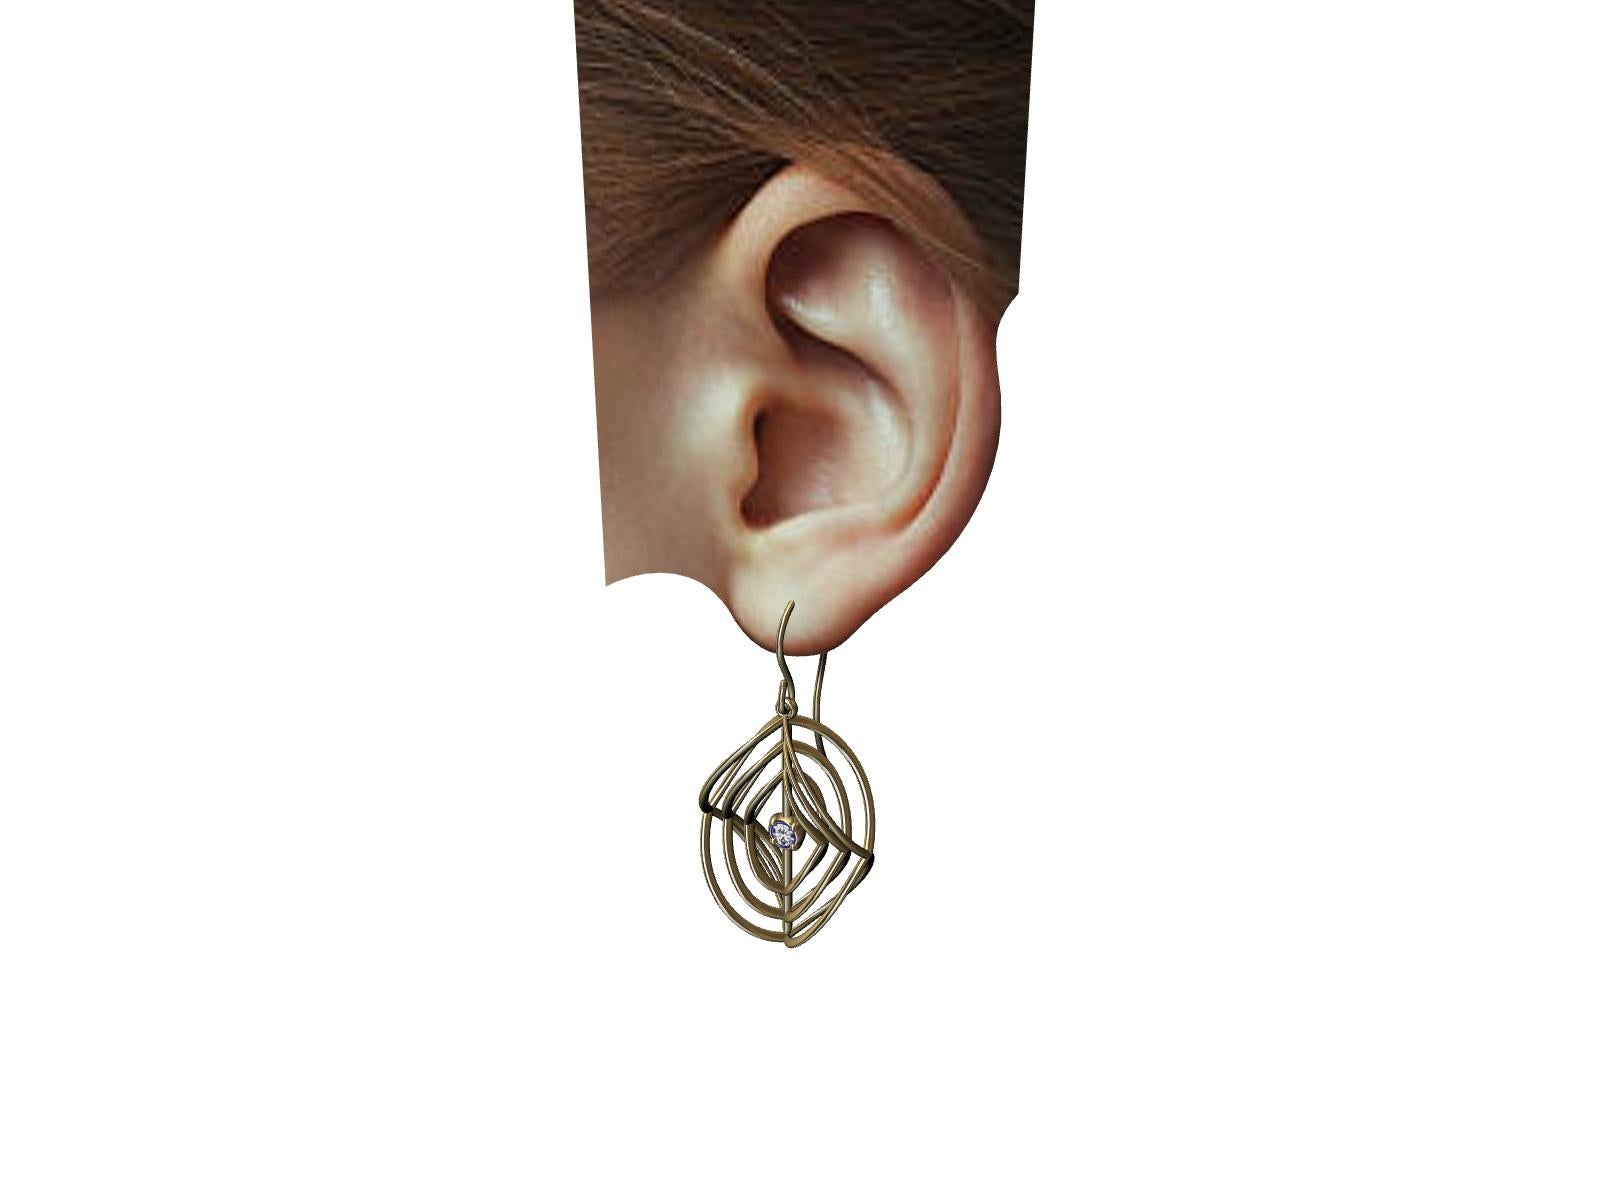 gold rhombus earrings